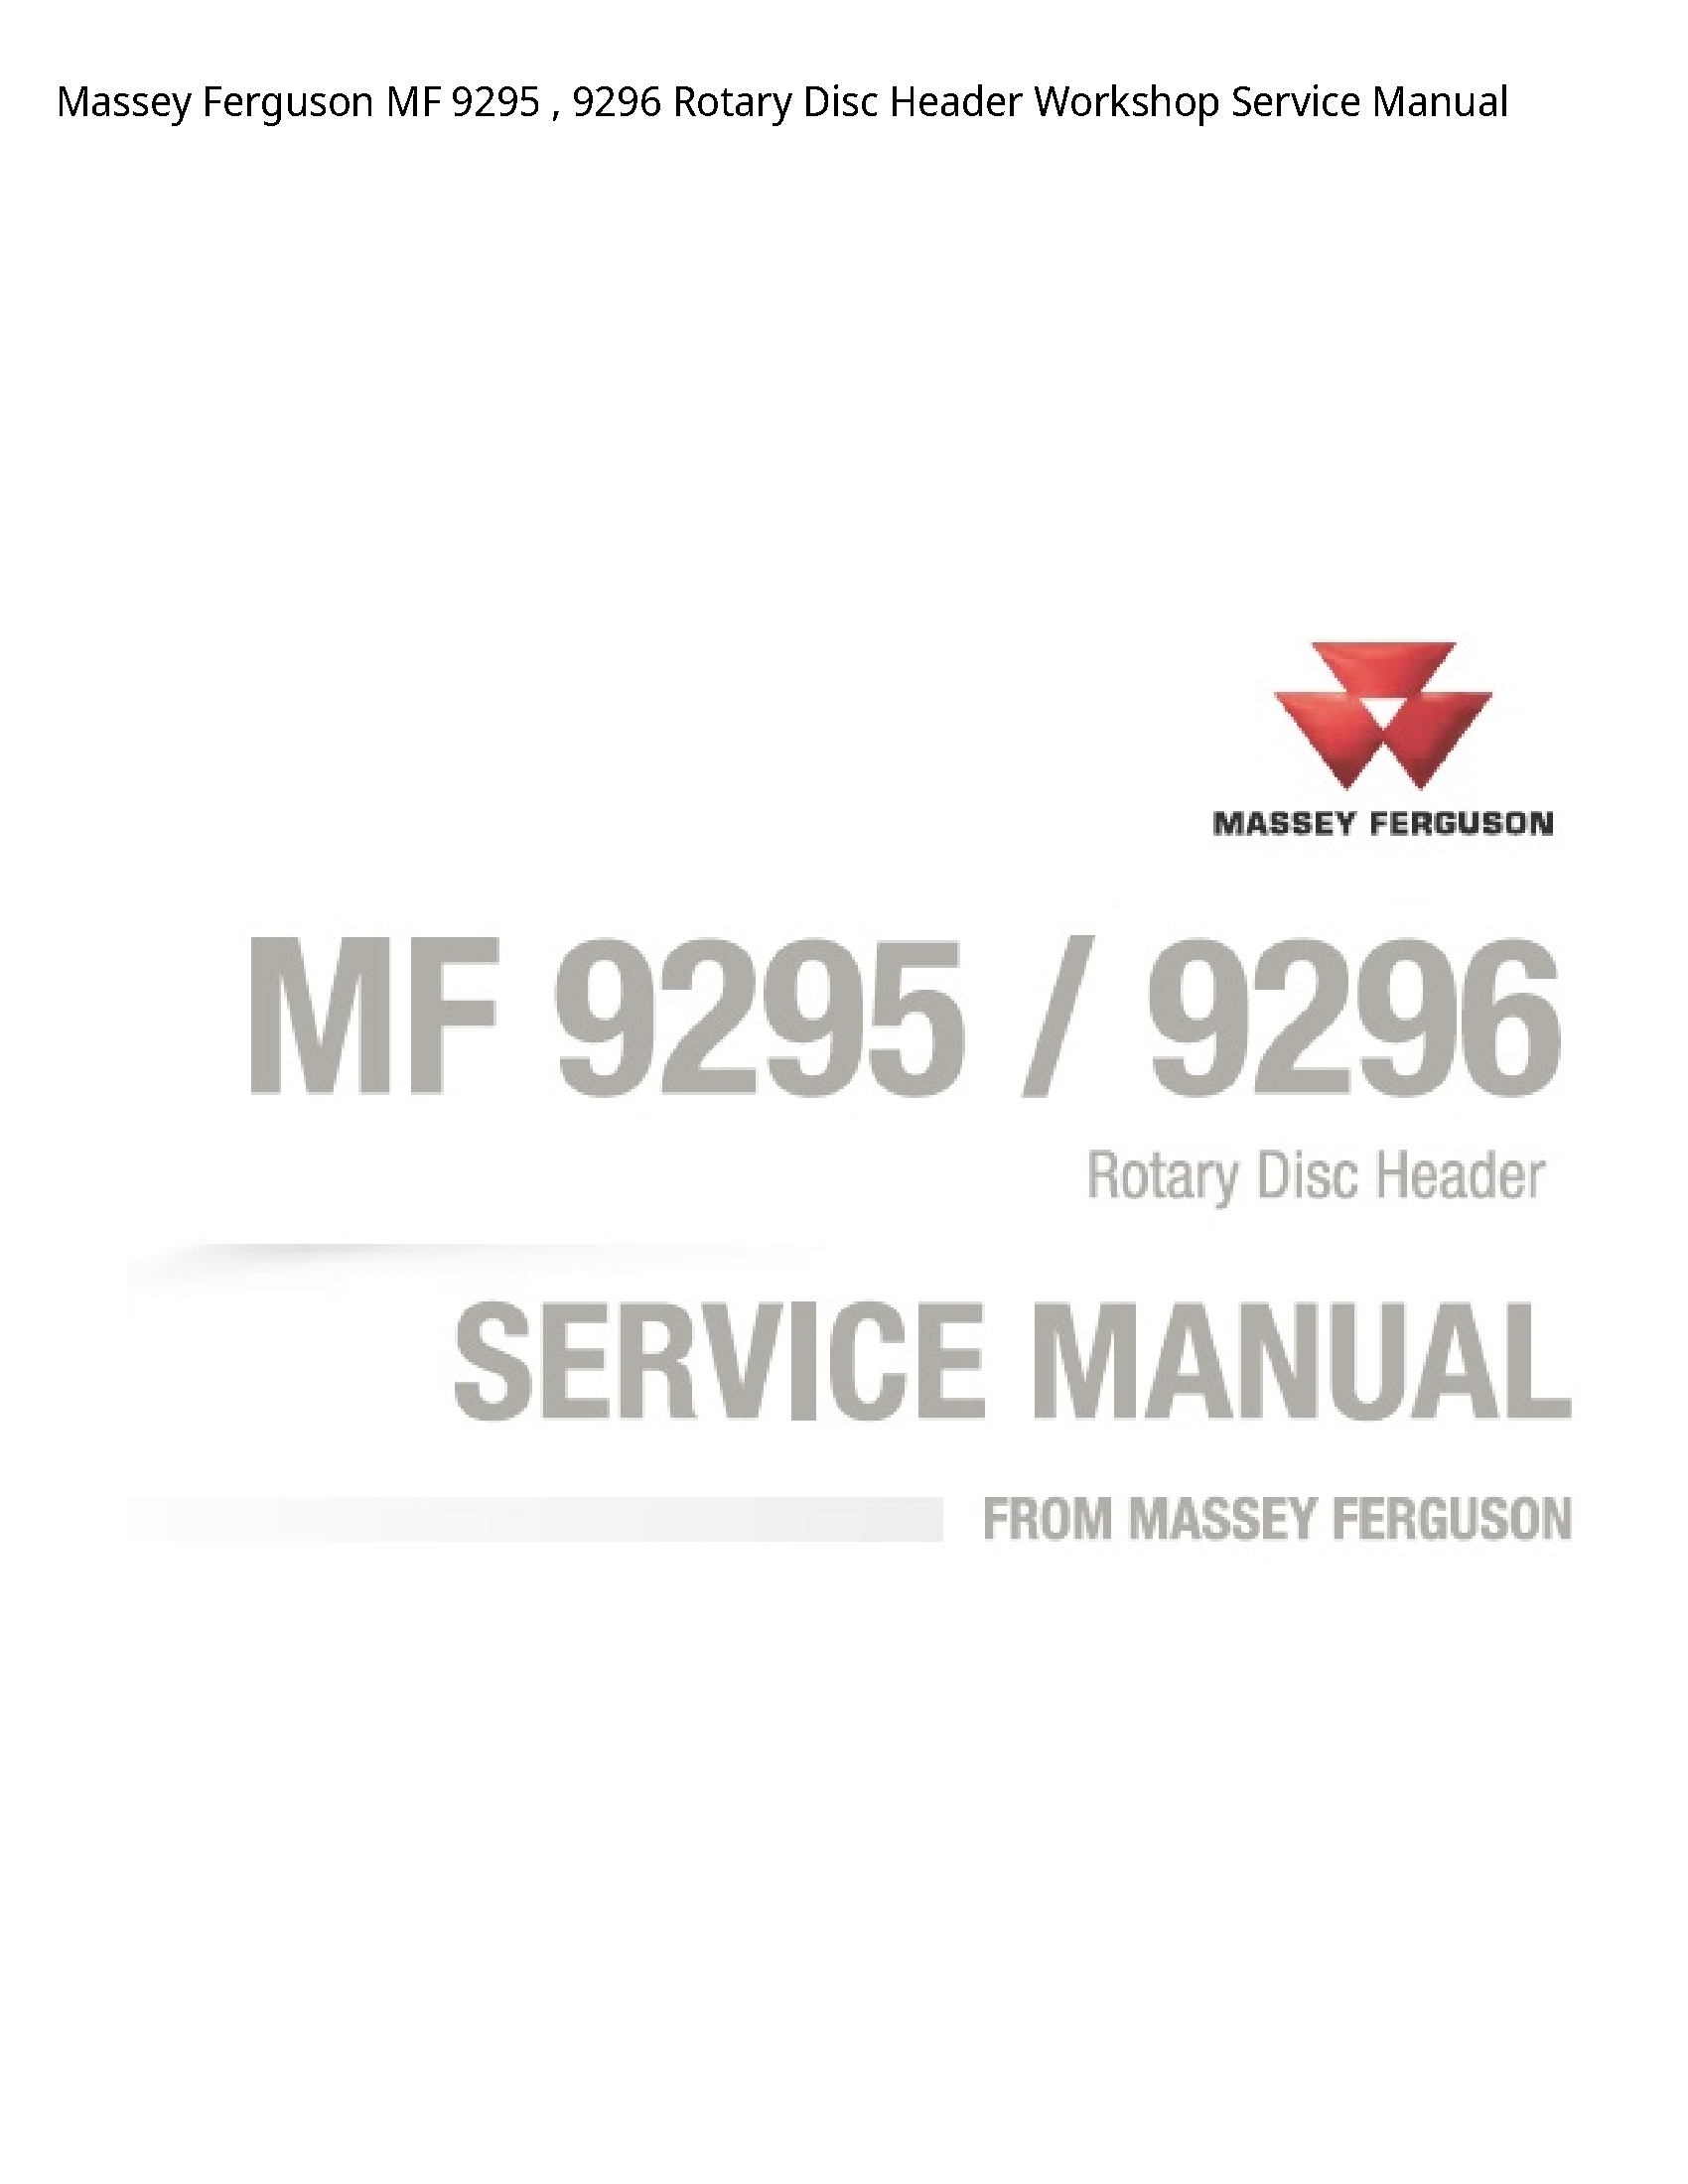 Massey Ferguson 9295 MF Rotary Disc Header Service manual